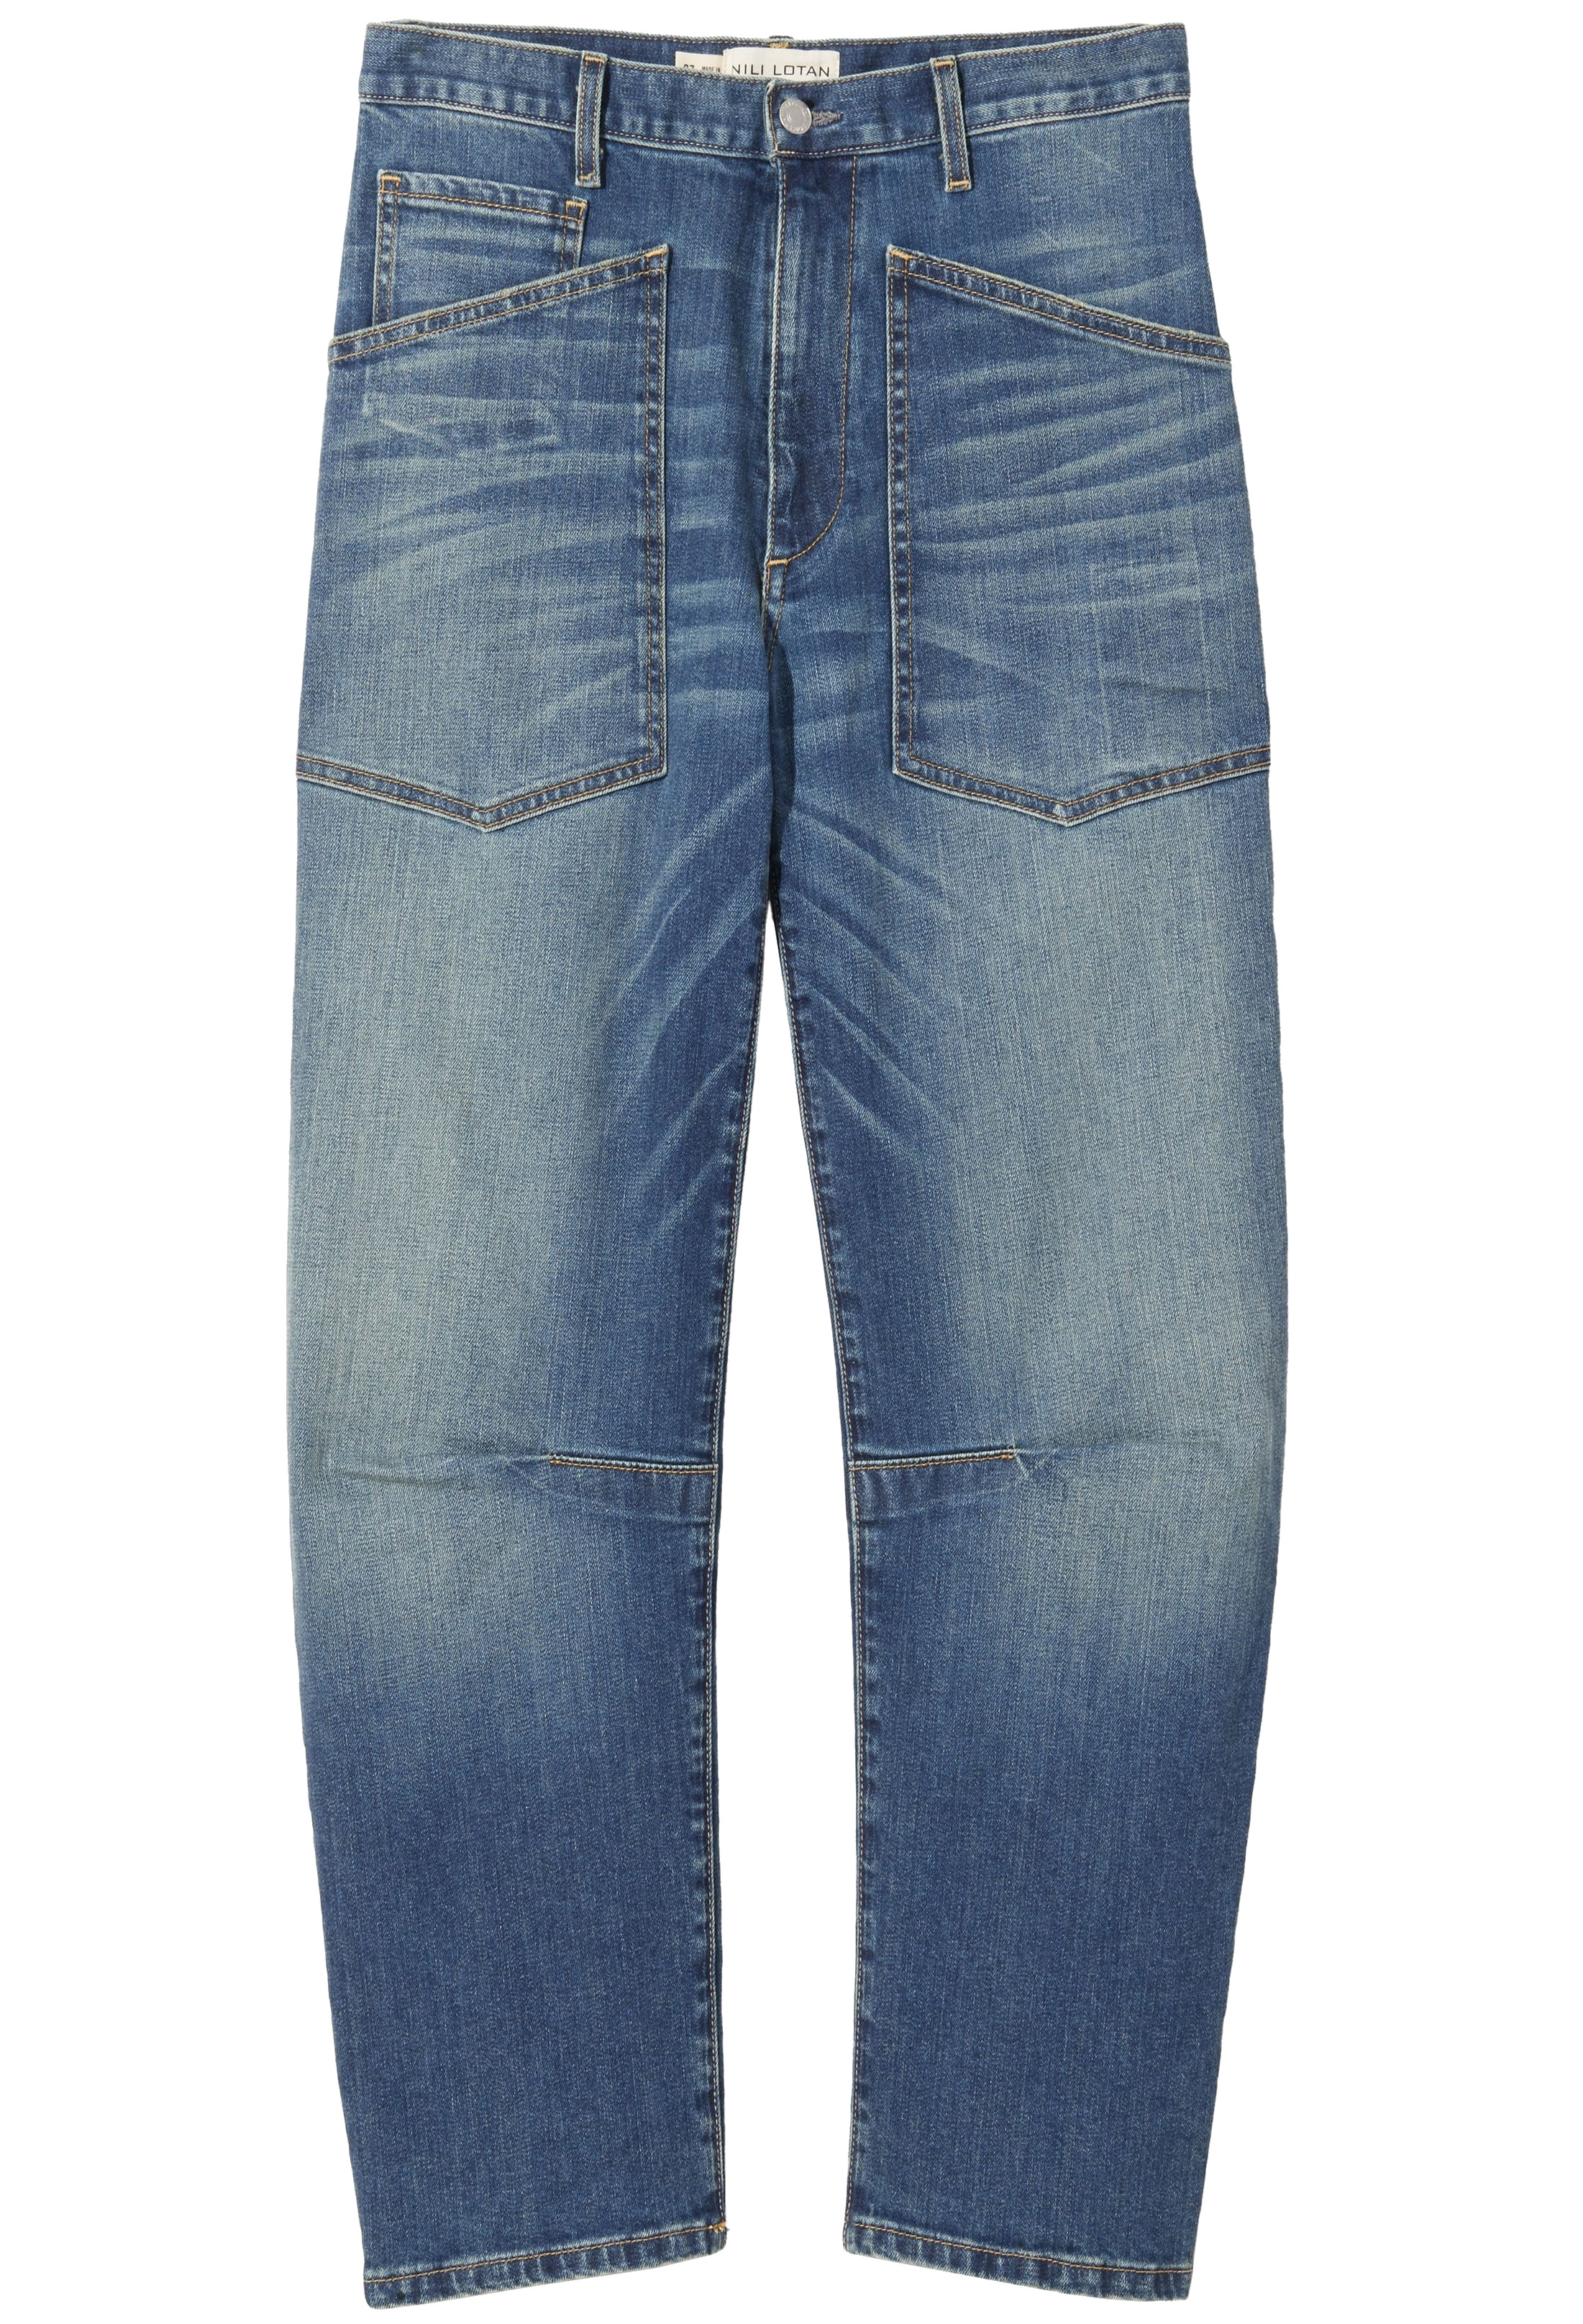 NILI LOTAN Shon Jeans in Classic Wash 24